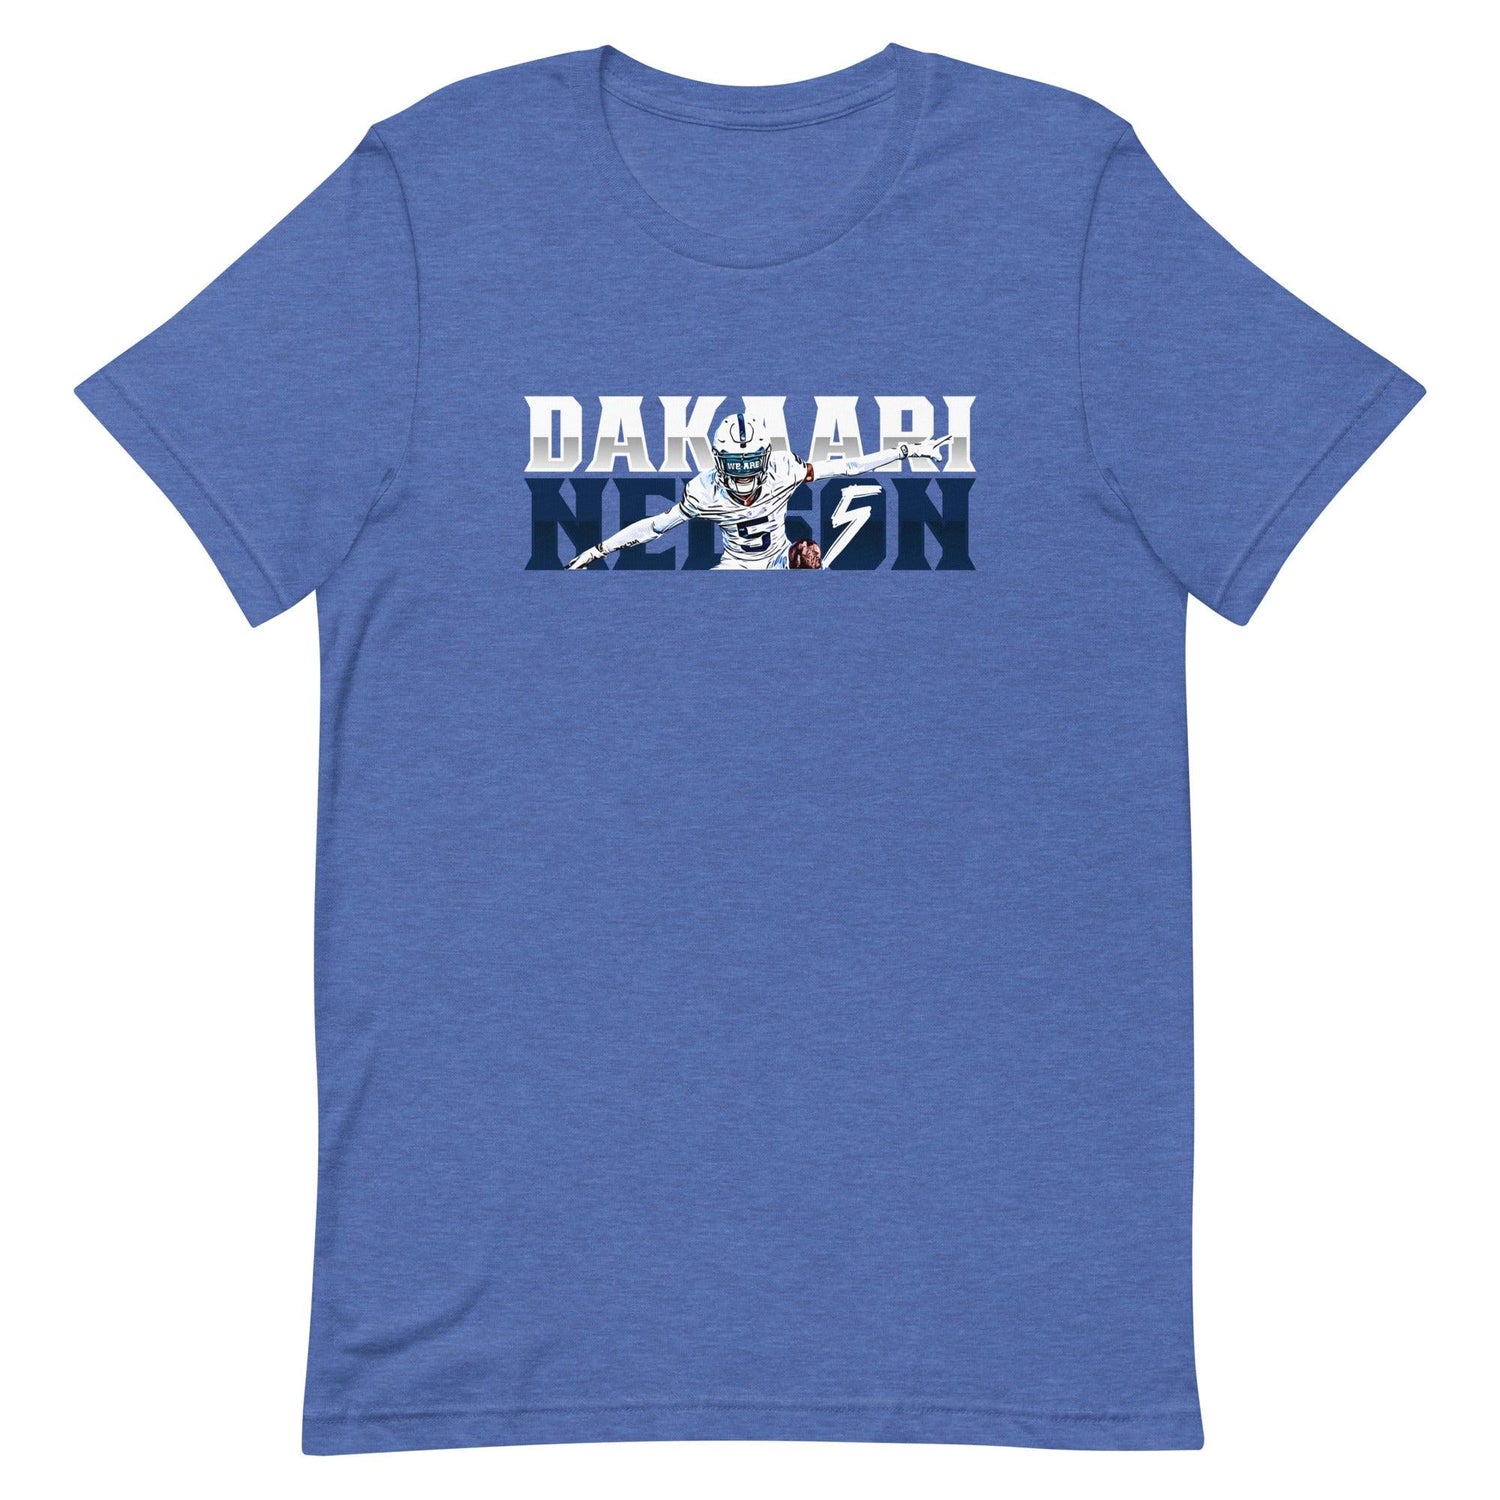 Dakaari Nelson "Gameday" t-shirt - Fan Arch